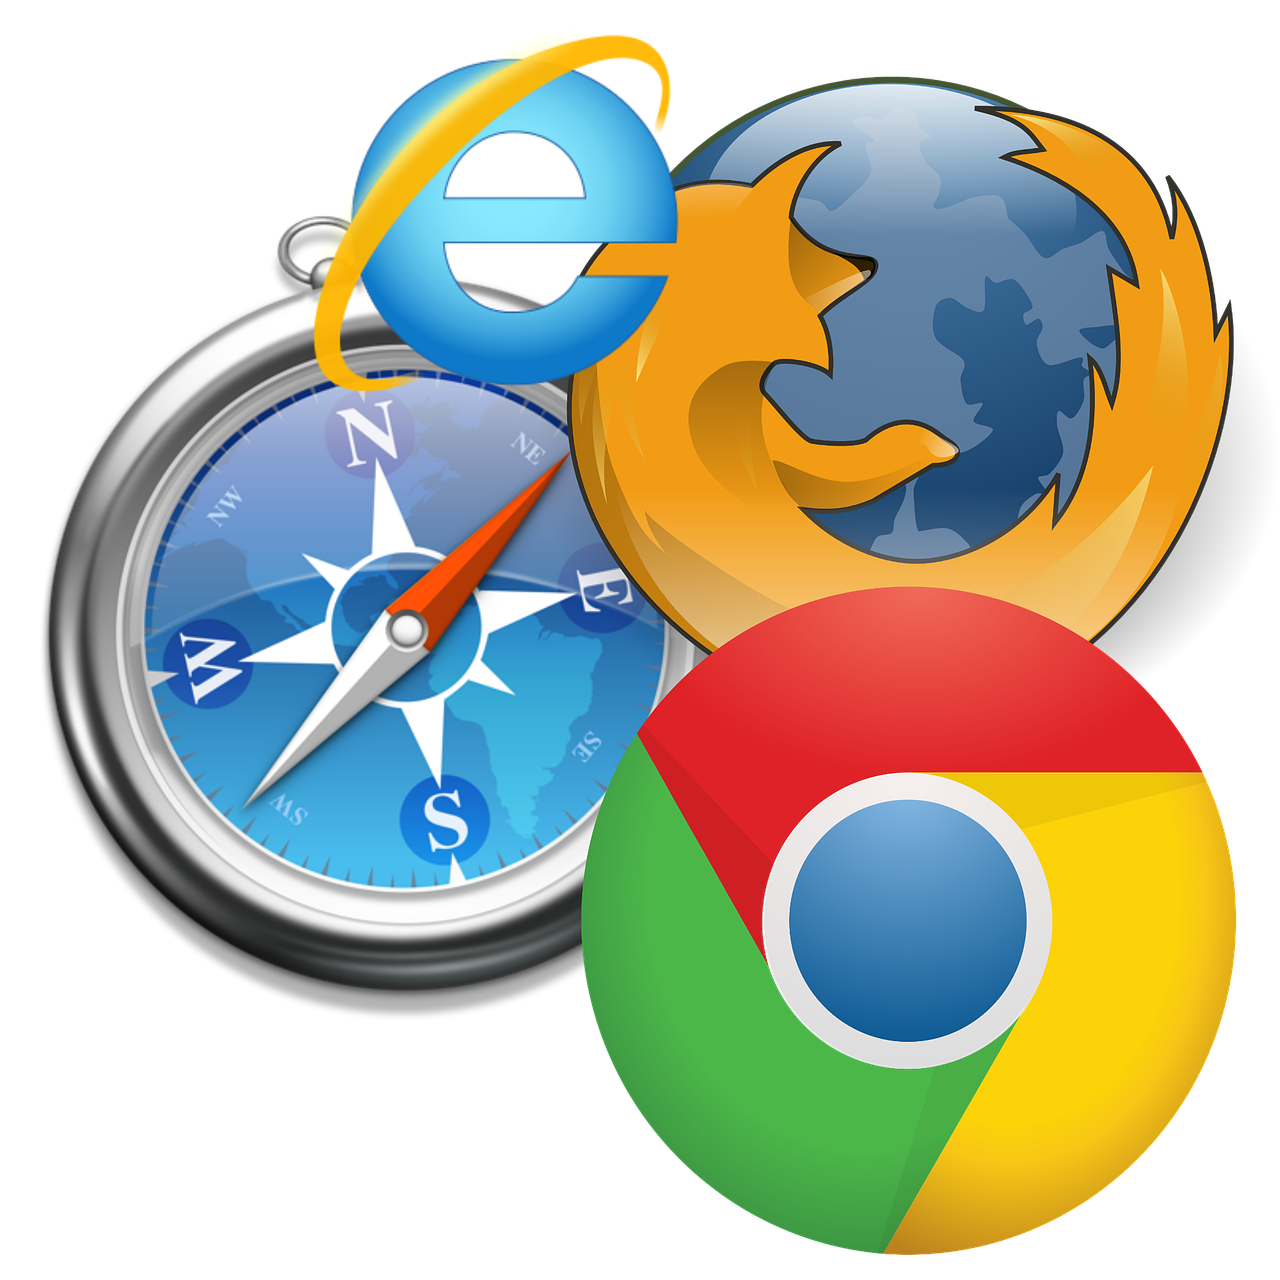 Naršyklė, Internetas, Www, Kompiuteris, Google Chromas, Internet Explorer, Safari, Firefox, Mozilla, Pc